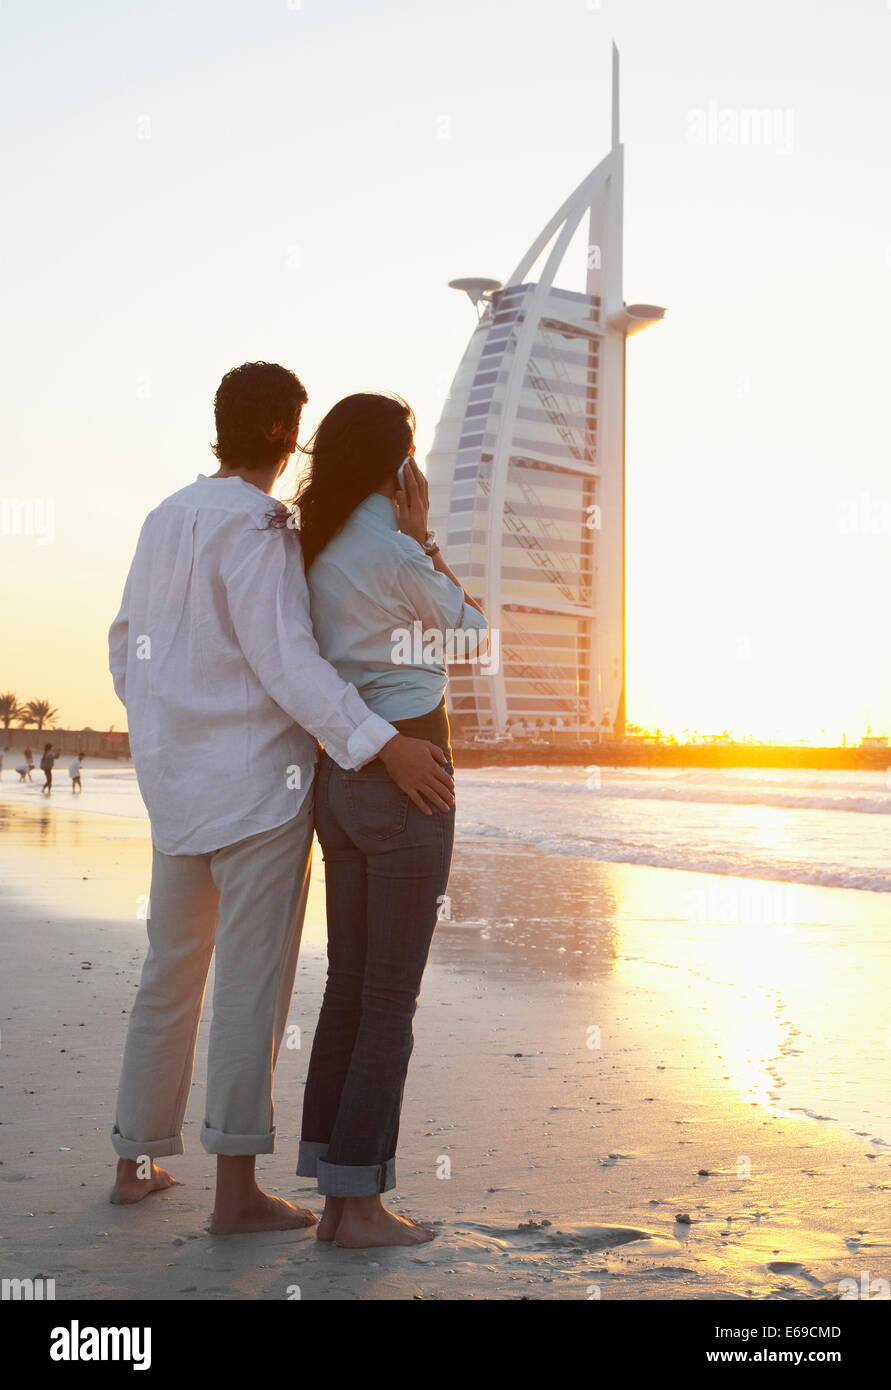 Couple admiring monument on beach, Dubai, United Arab Emirates Stock Photo